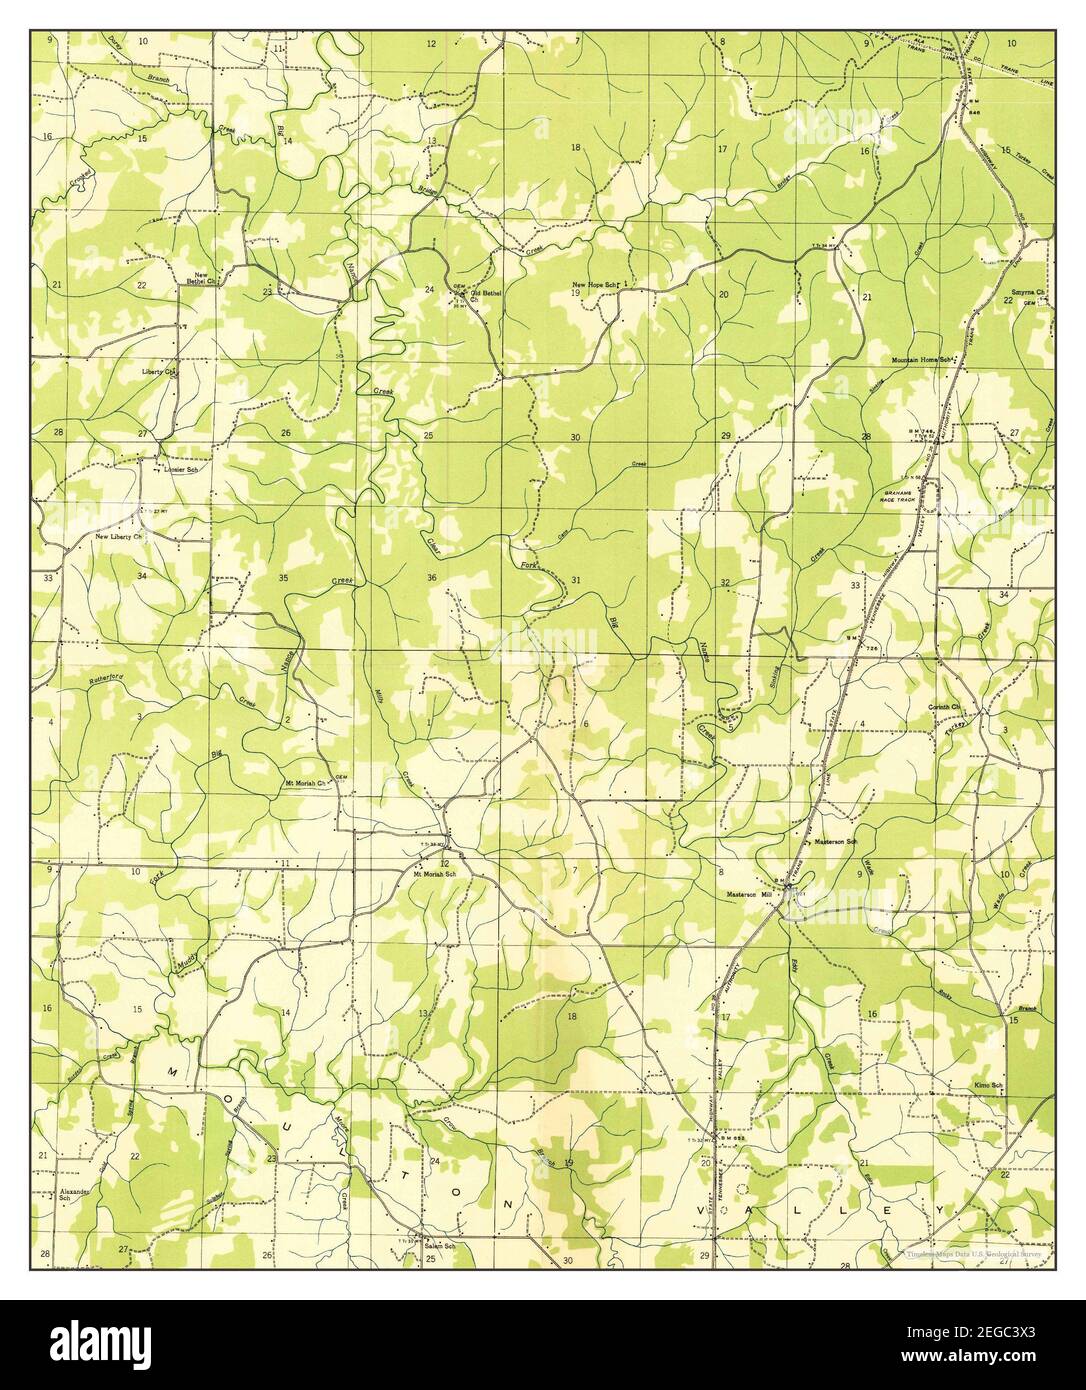 Masterson, Alabama, map 1936, 1:24000, United States of America by Timeless Maps, data U.S. Geological Survey Stock Photo